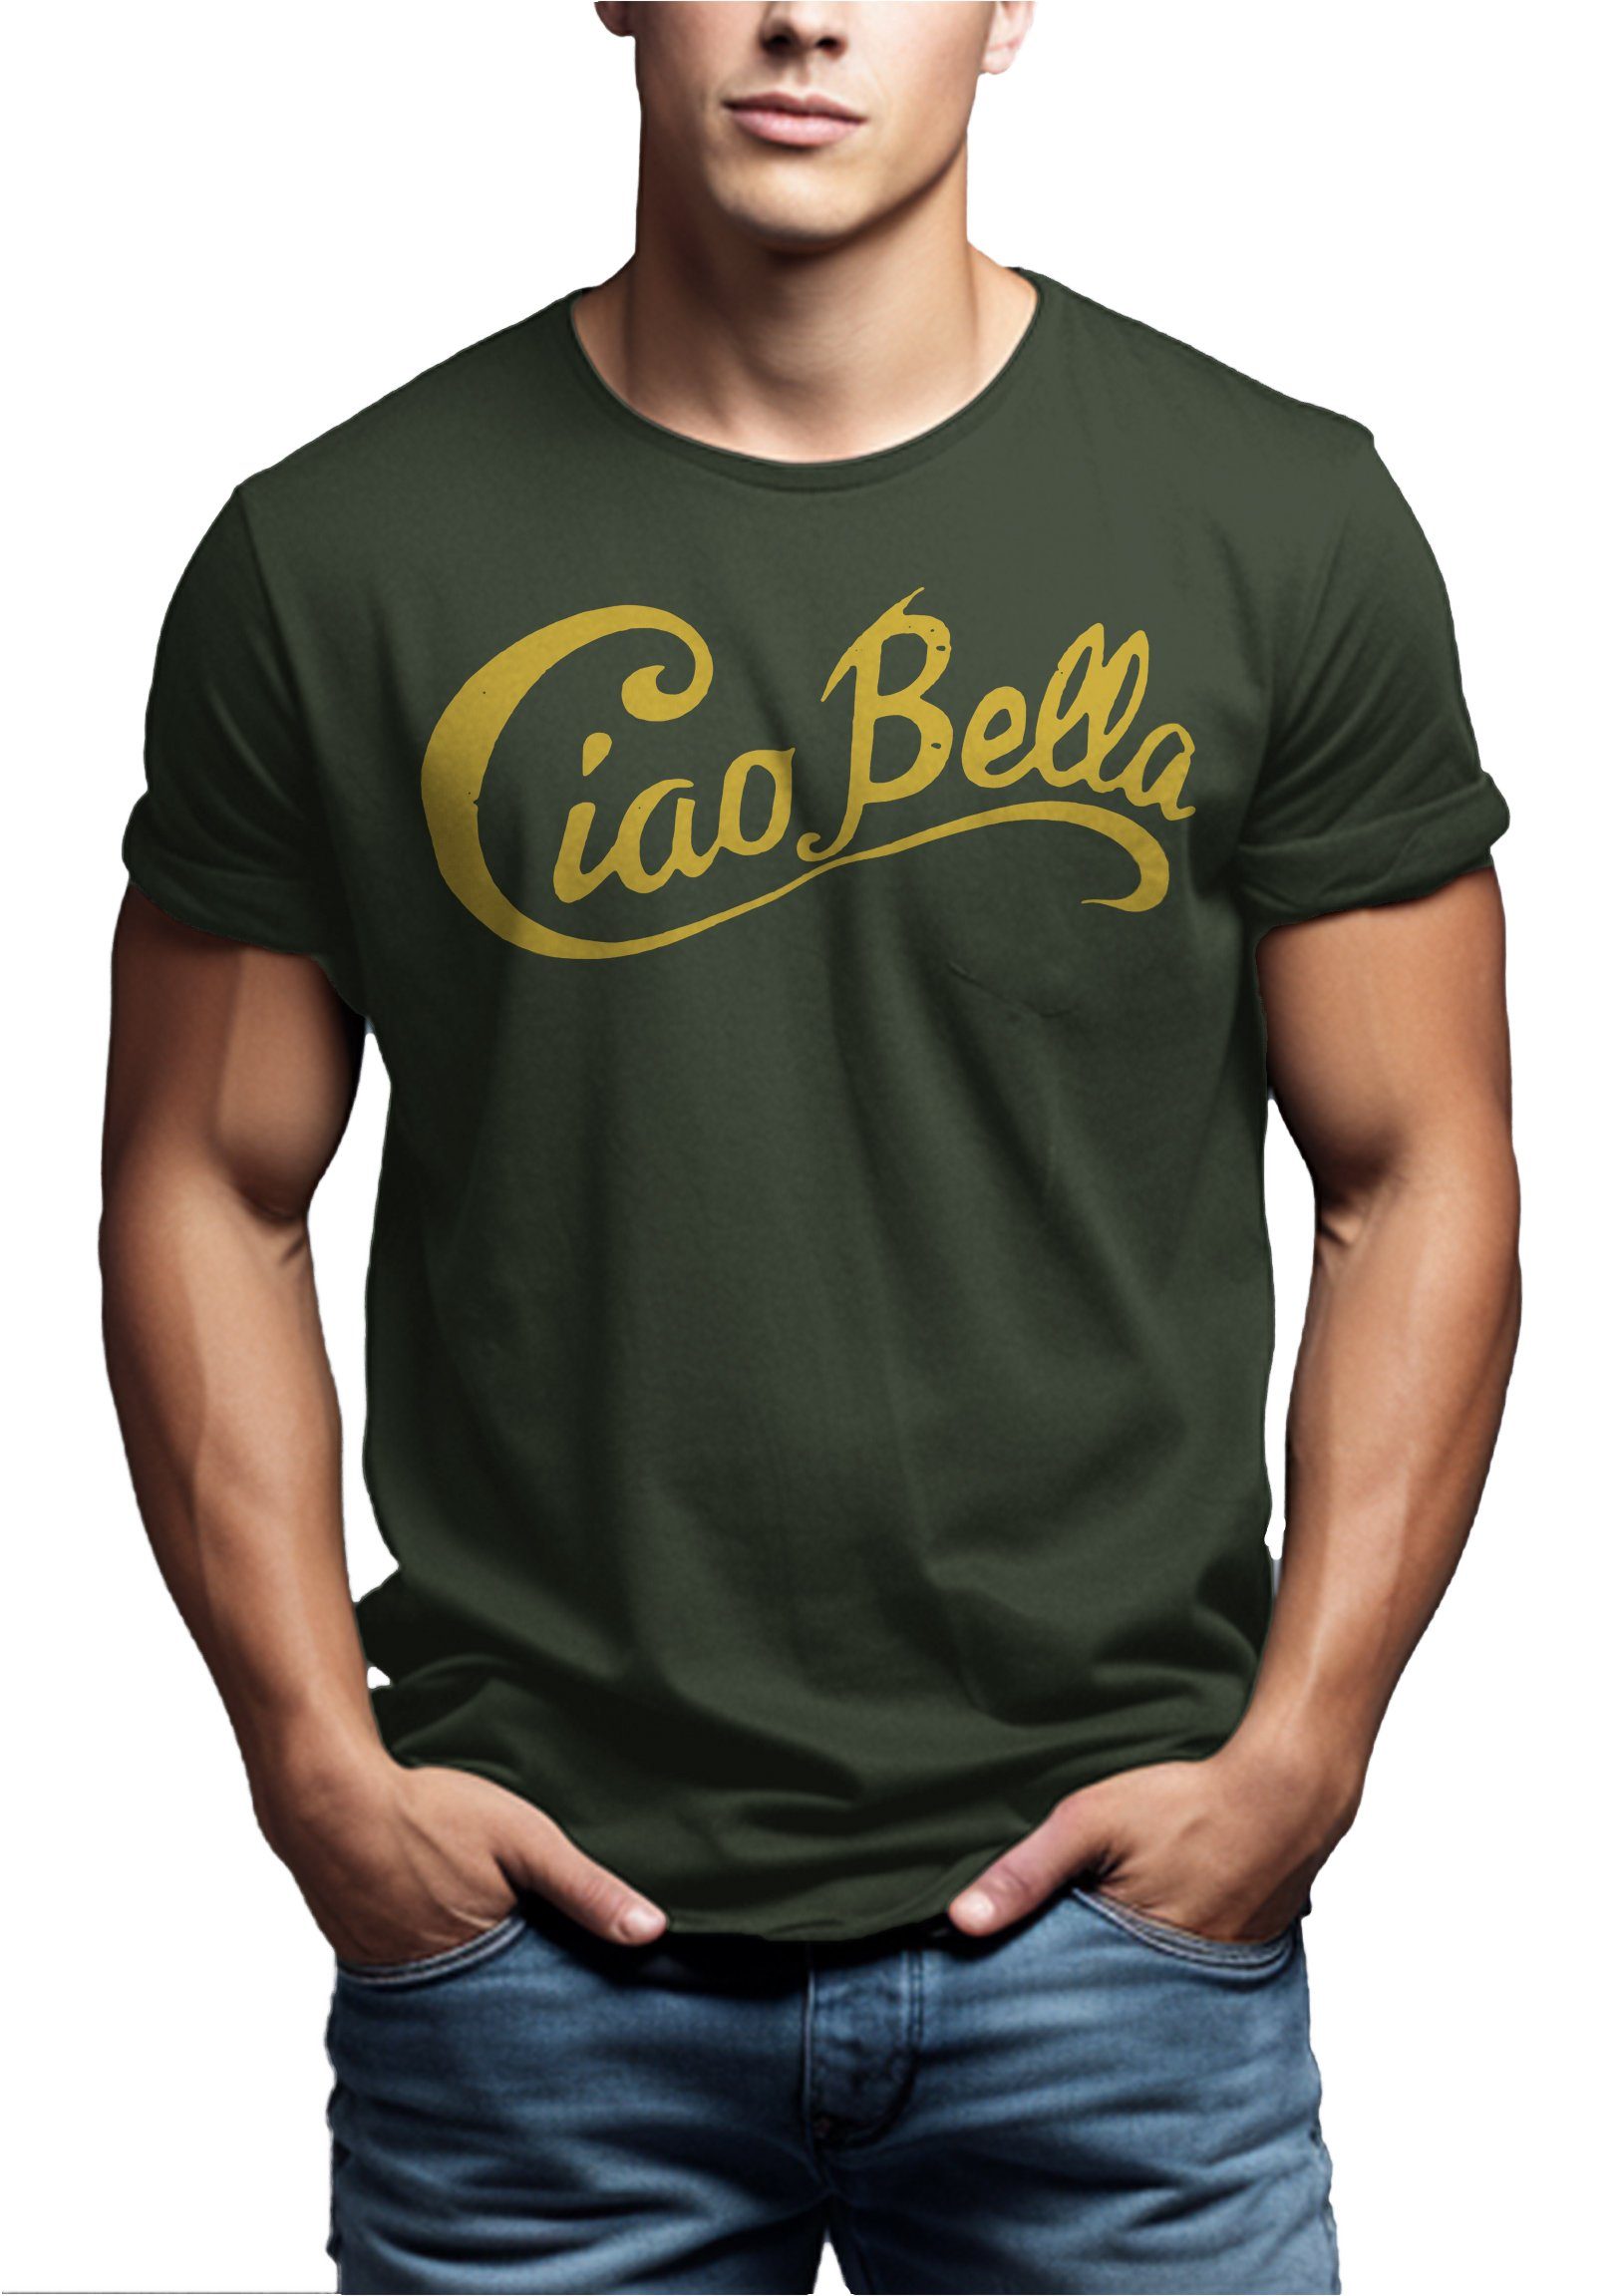 Motiv Coole Herren Bella Print-Shirt MAKAYA Italienischer Style Logo, Grün Ciao Mode Italien Spruch